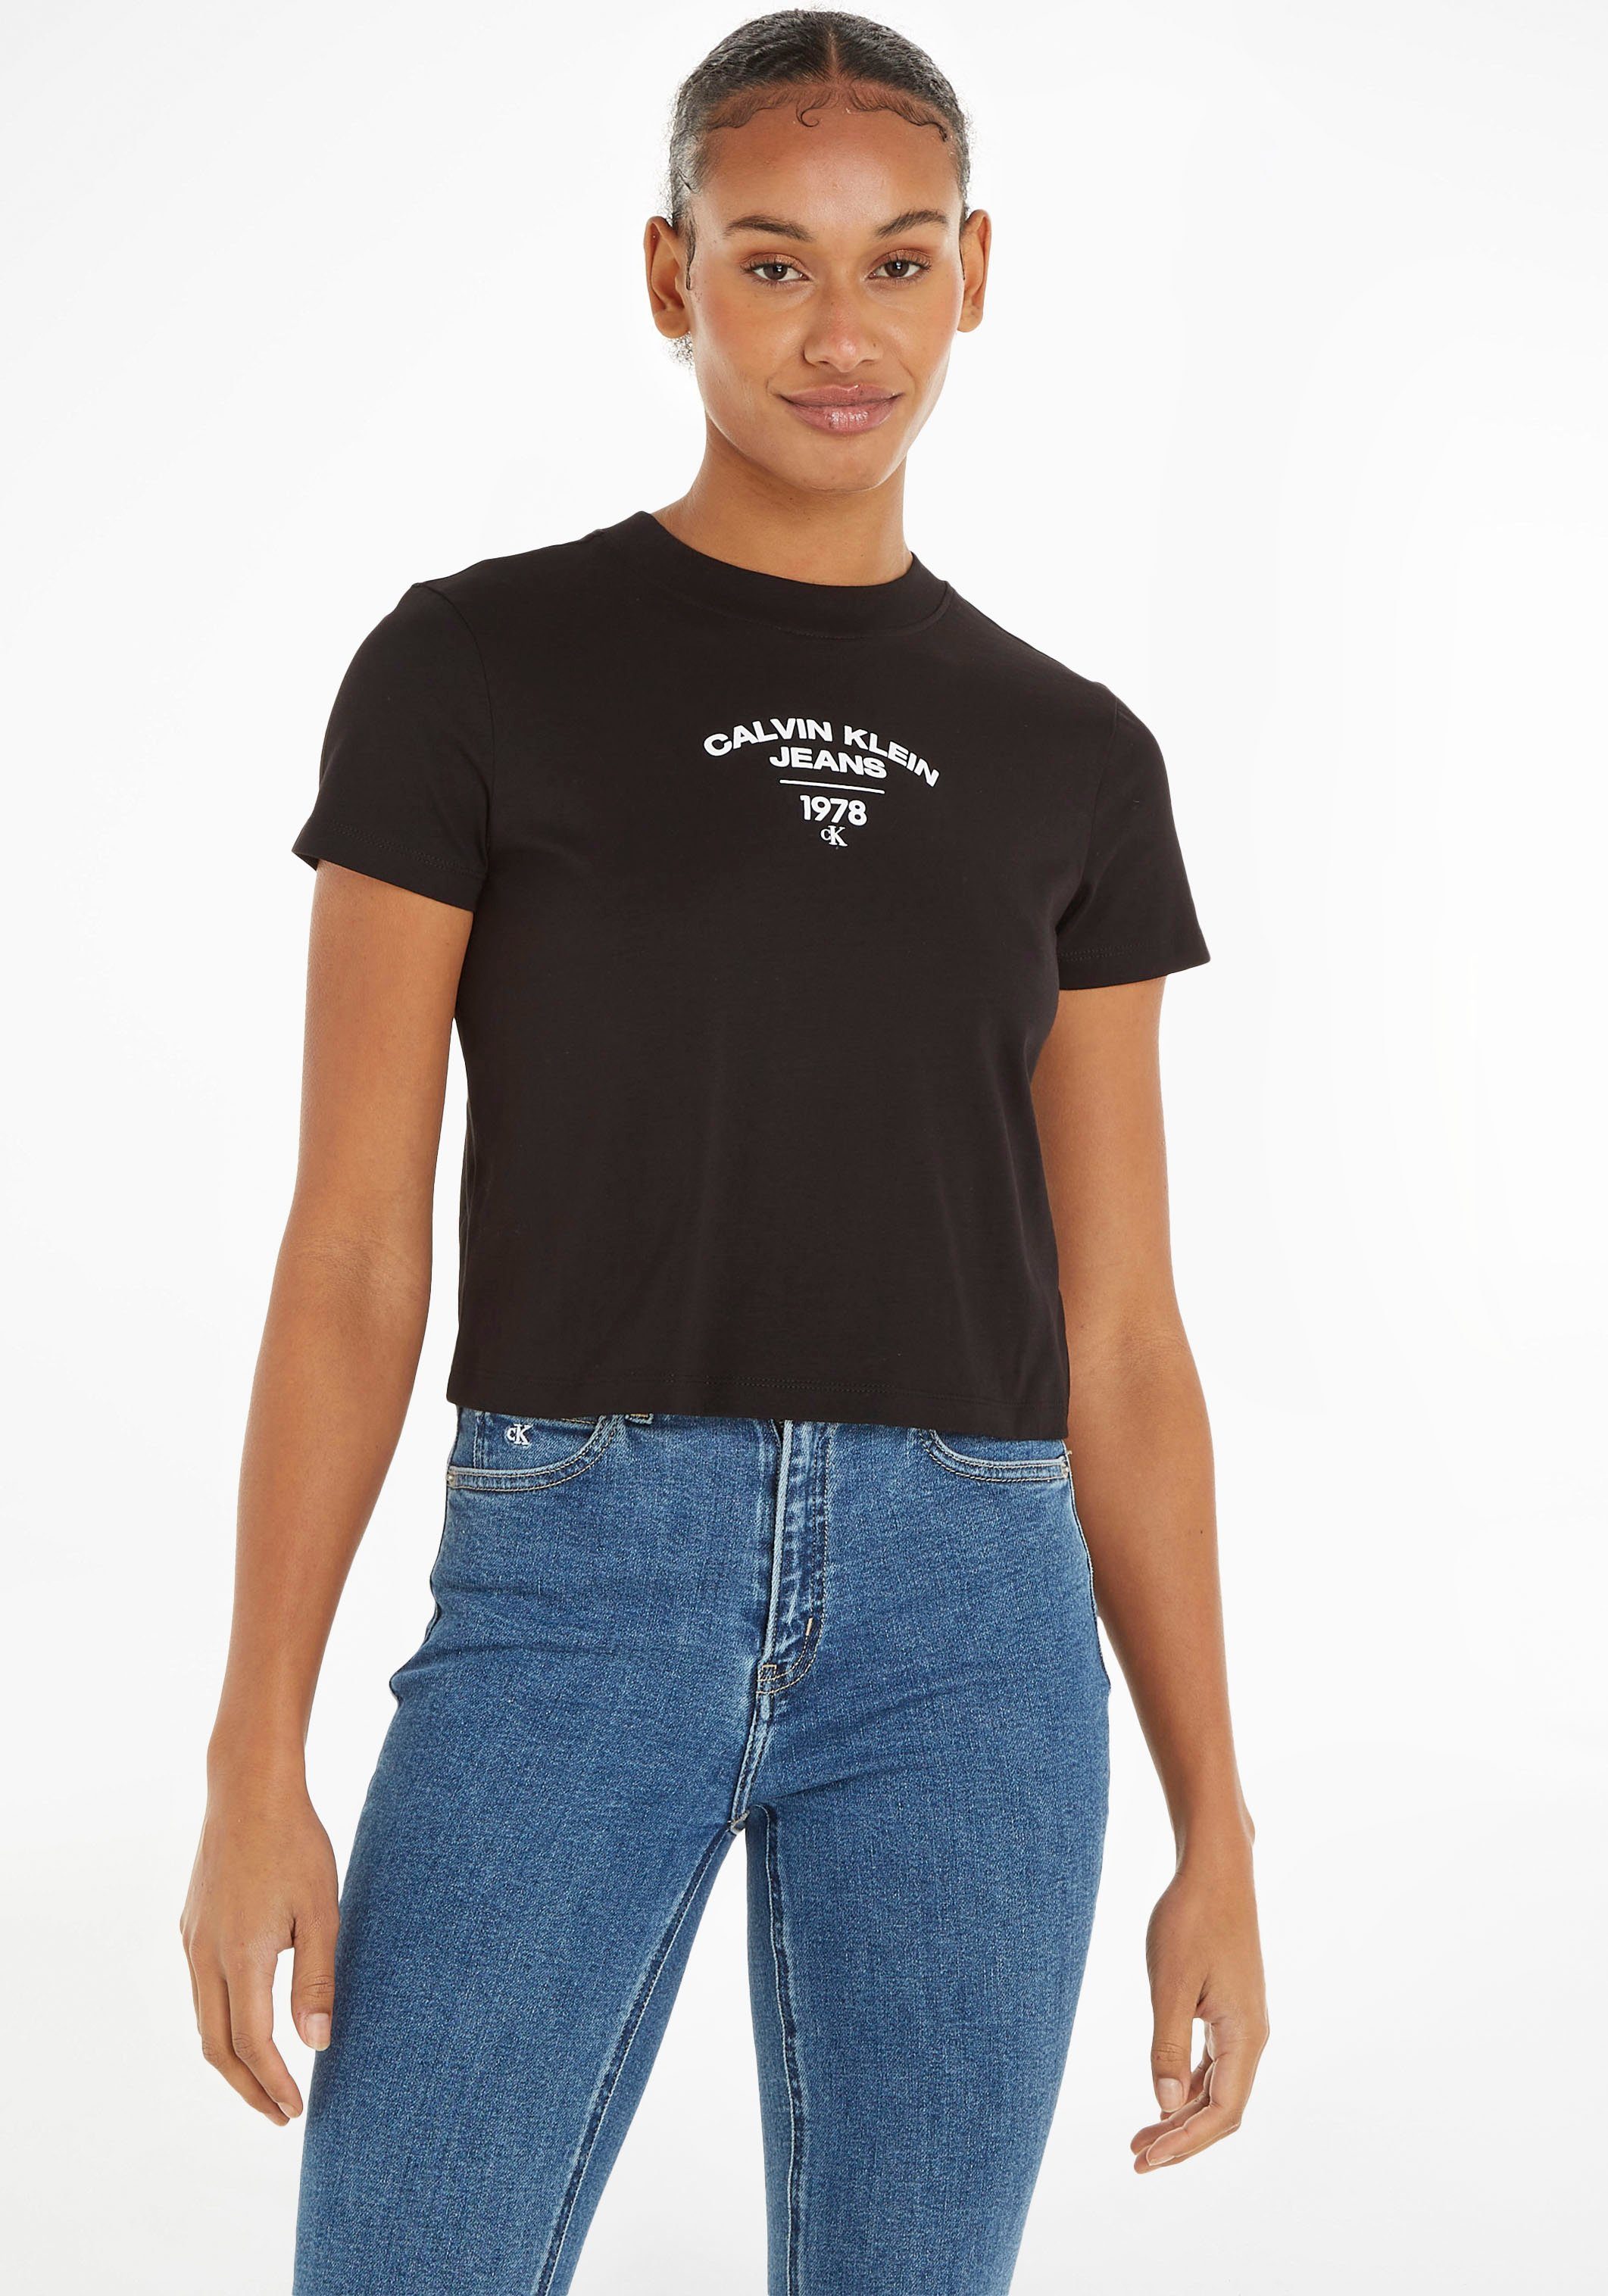 Calvin Klein Jeans TEE Black Ck VARSITY BABY T-Shirt LOGO